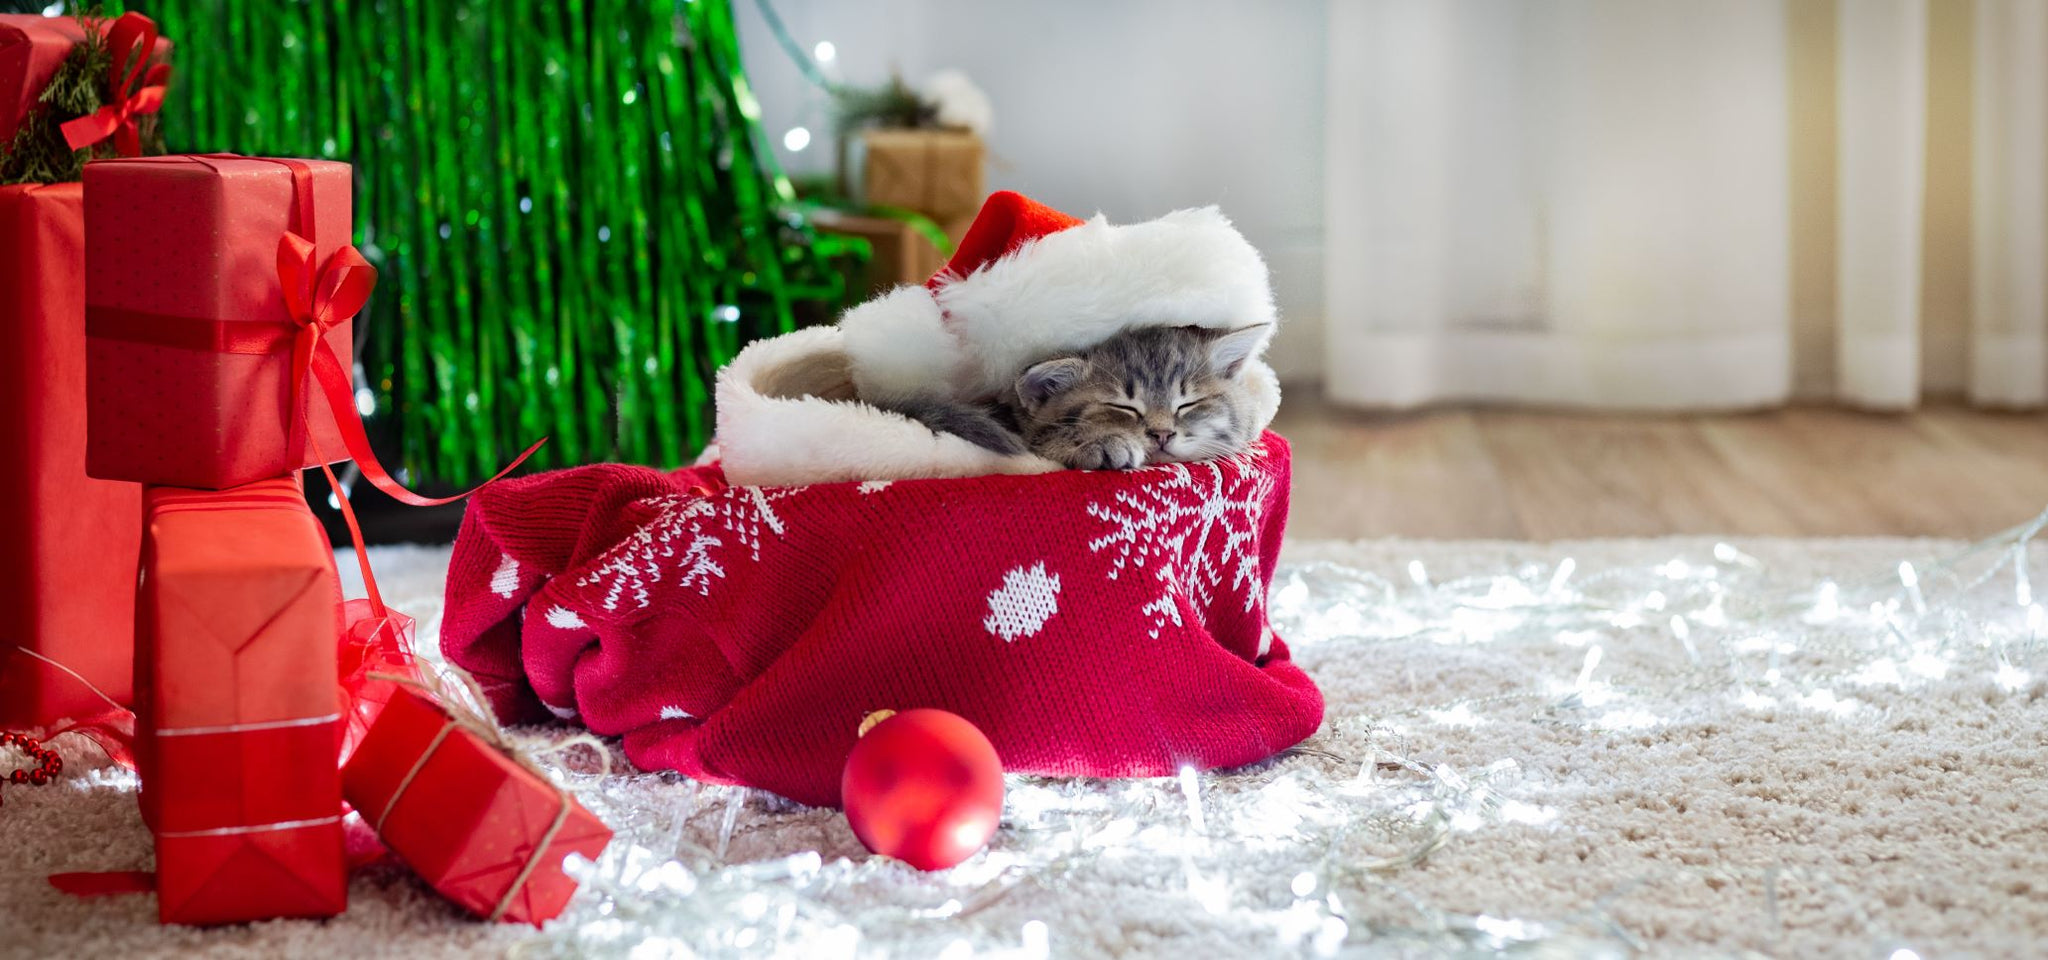 Cat Gallery 2020 Christmas Best Seller Gift Guide